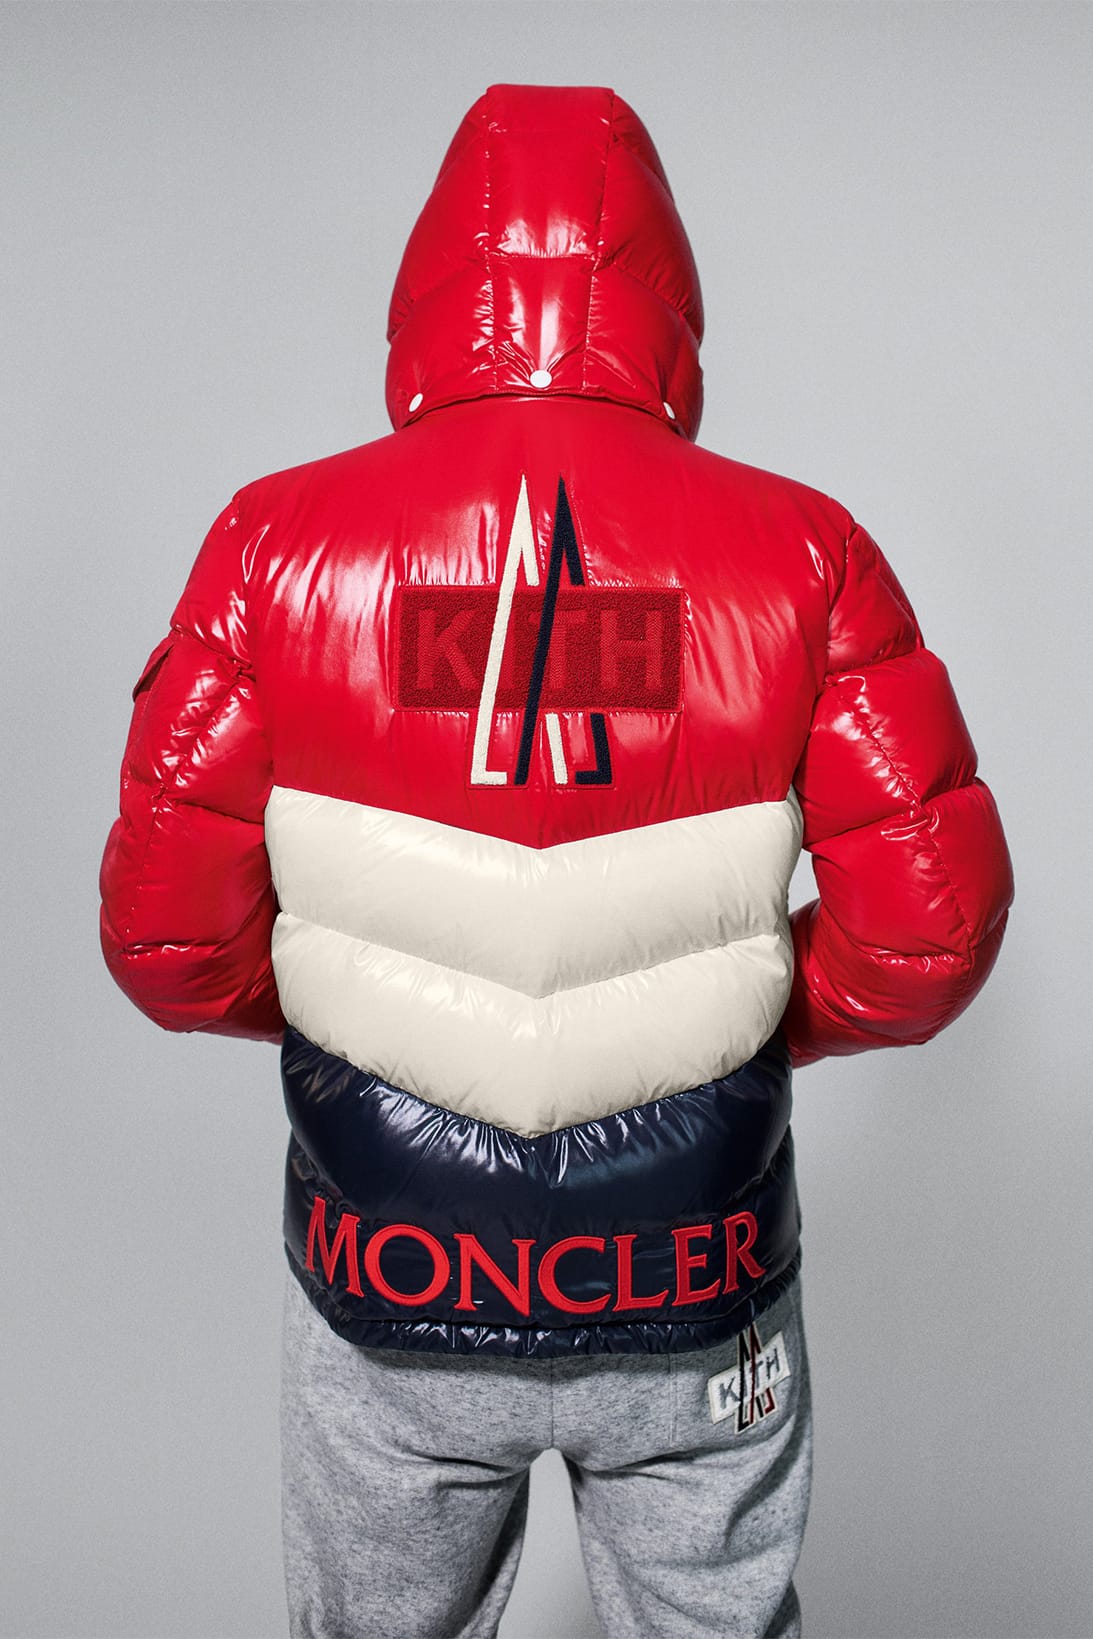 moncler asics jacket